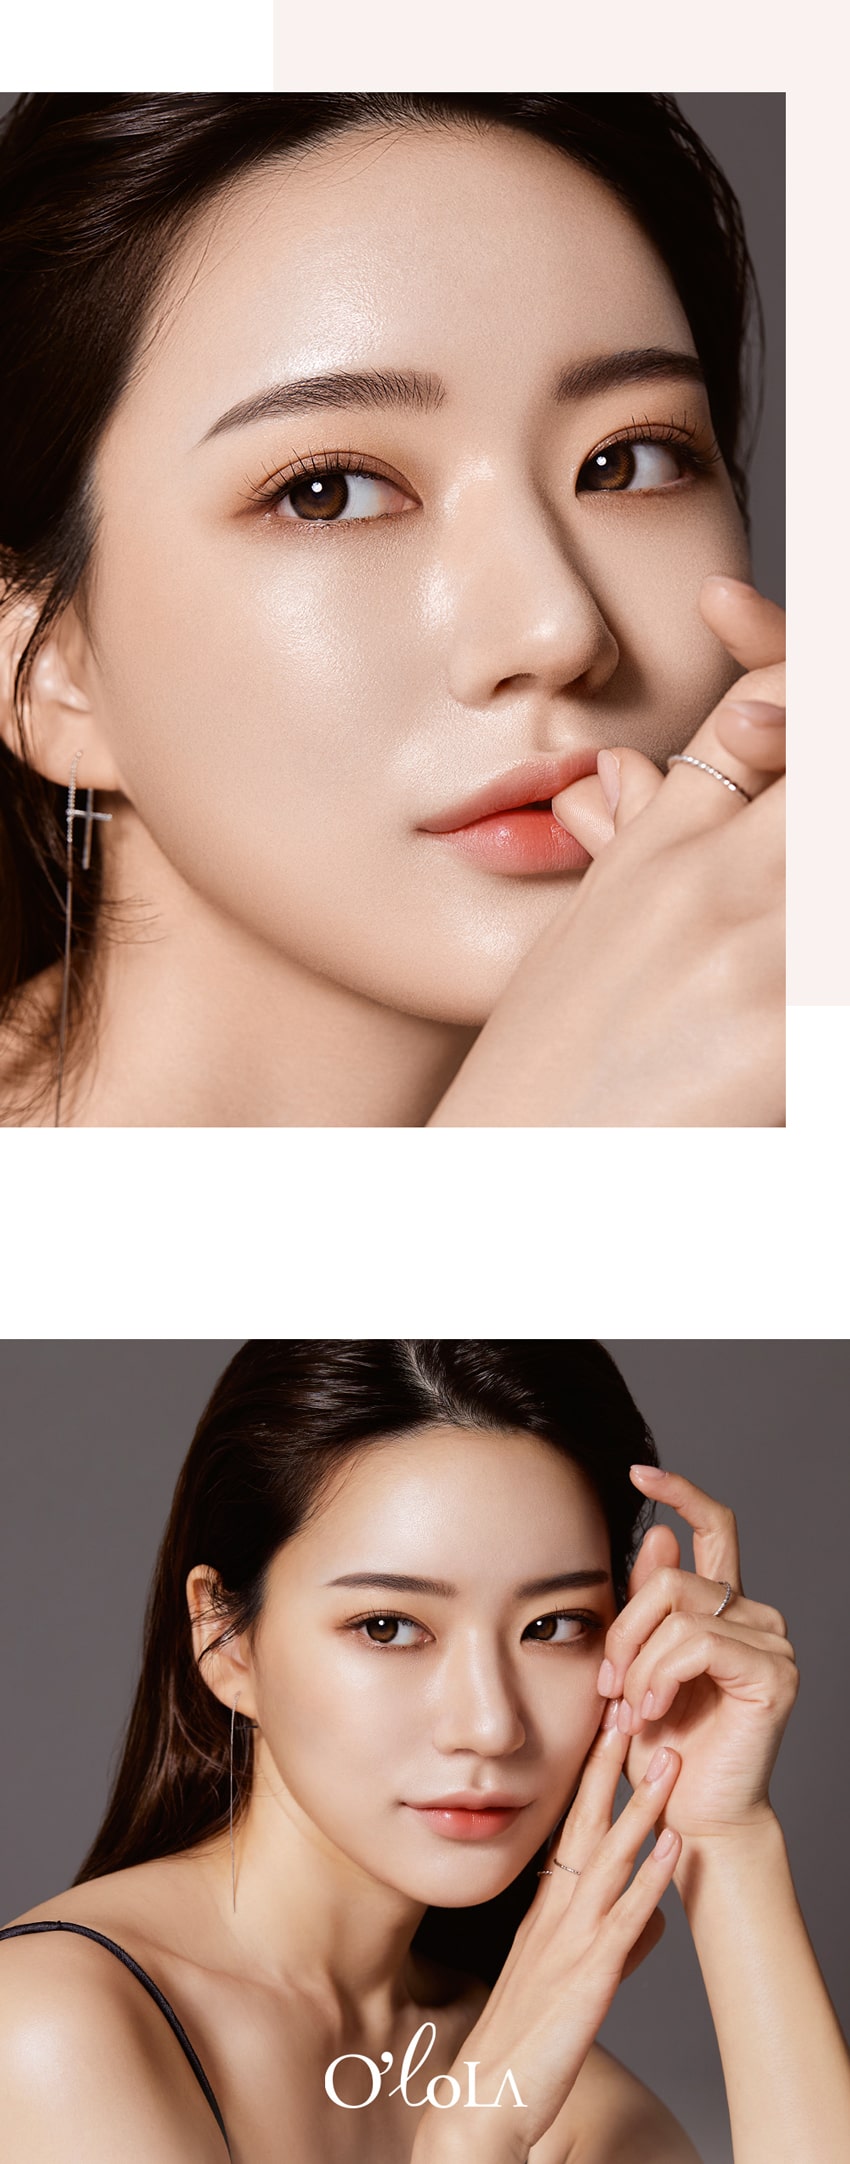 queenslens, olola, daymood, popular Korean, colored contacts, brown, popular makeup